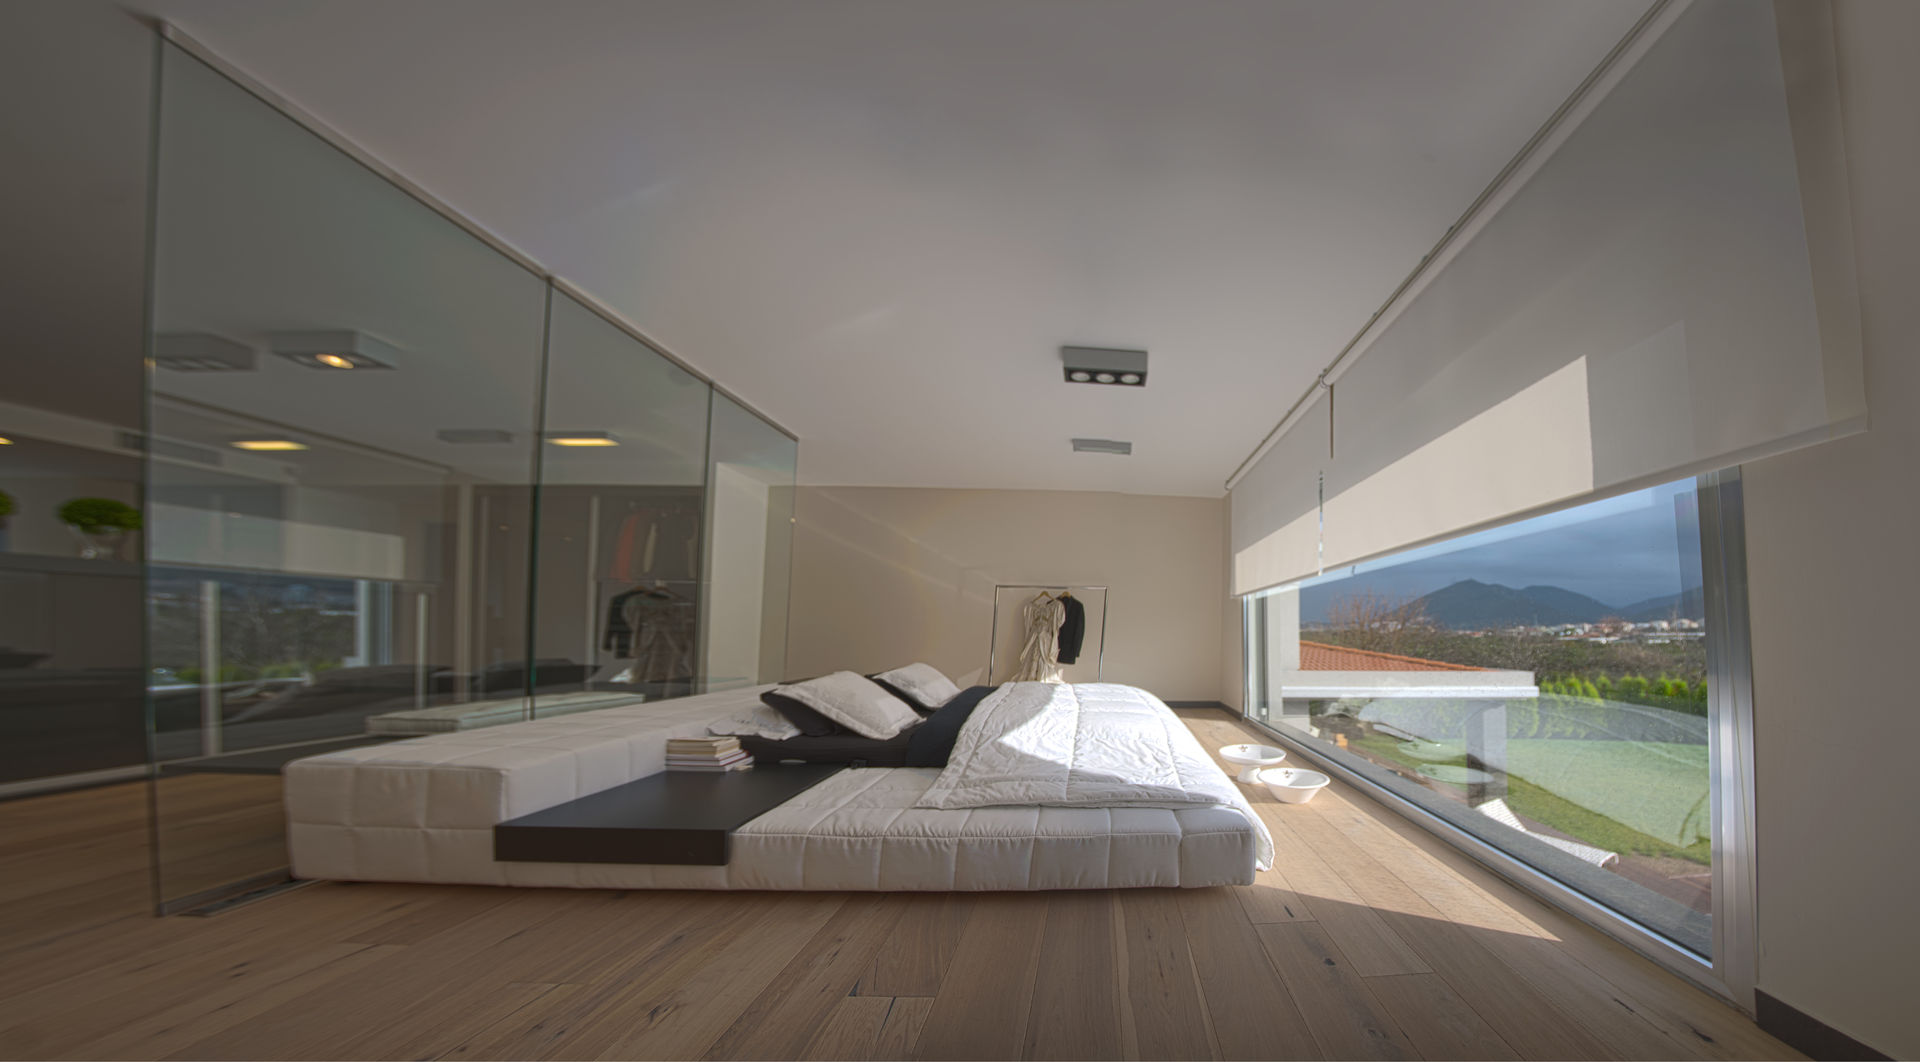 SAHİLEVLERİ PROJE, As Tasarım - Mimarlık As Tasarım - Mimarlık Dormitorios de estilo moderno Camas y cabeceros